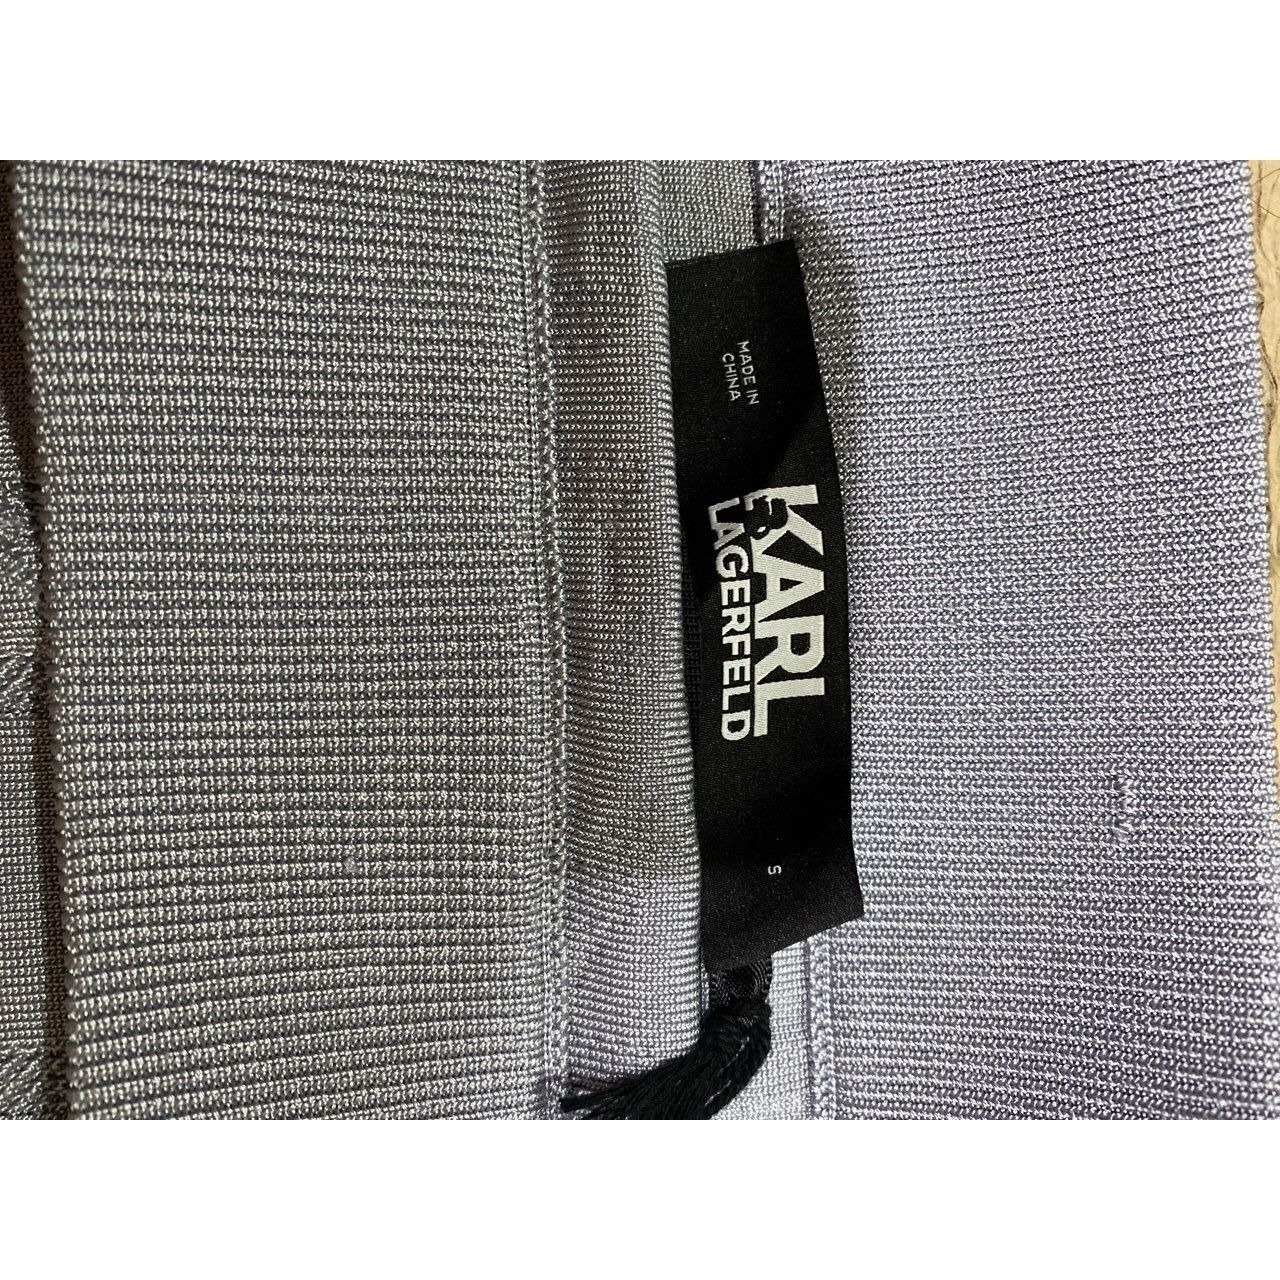 Karl Lagerfeld Light Grey Pencil Skirt